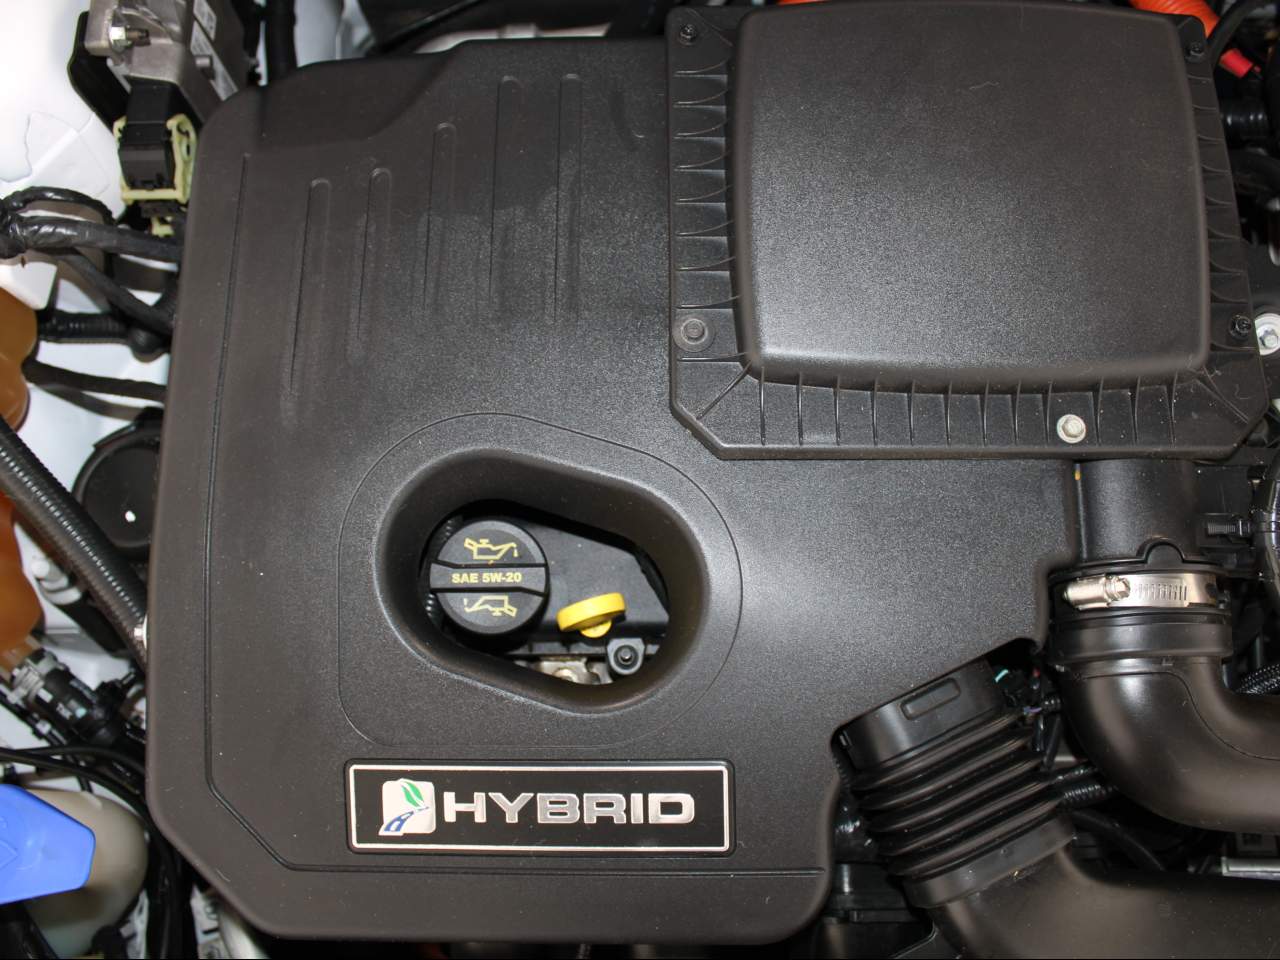 2013 Ford Fusion Hybrid SE